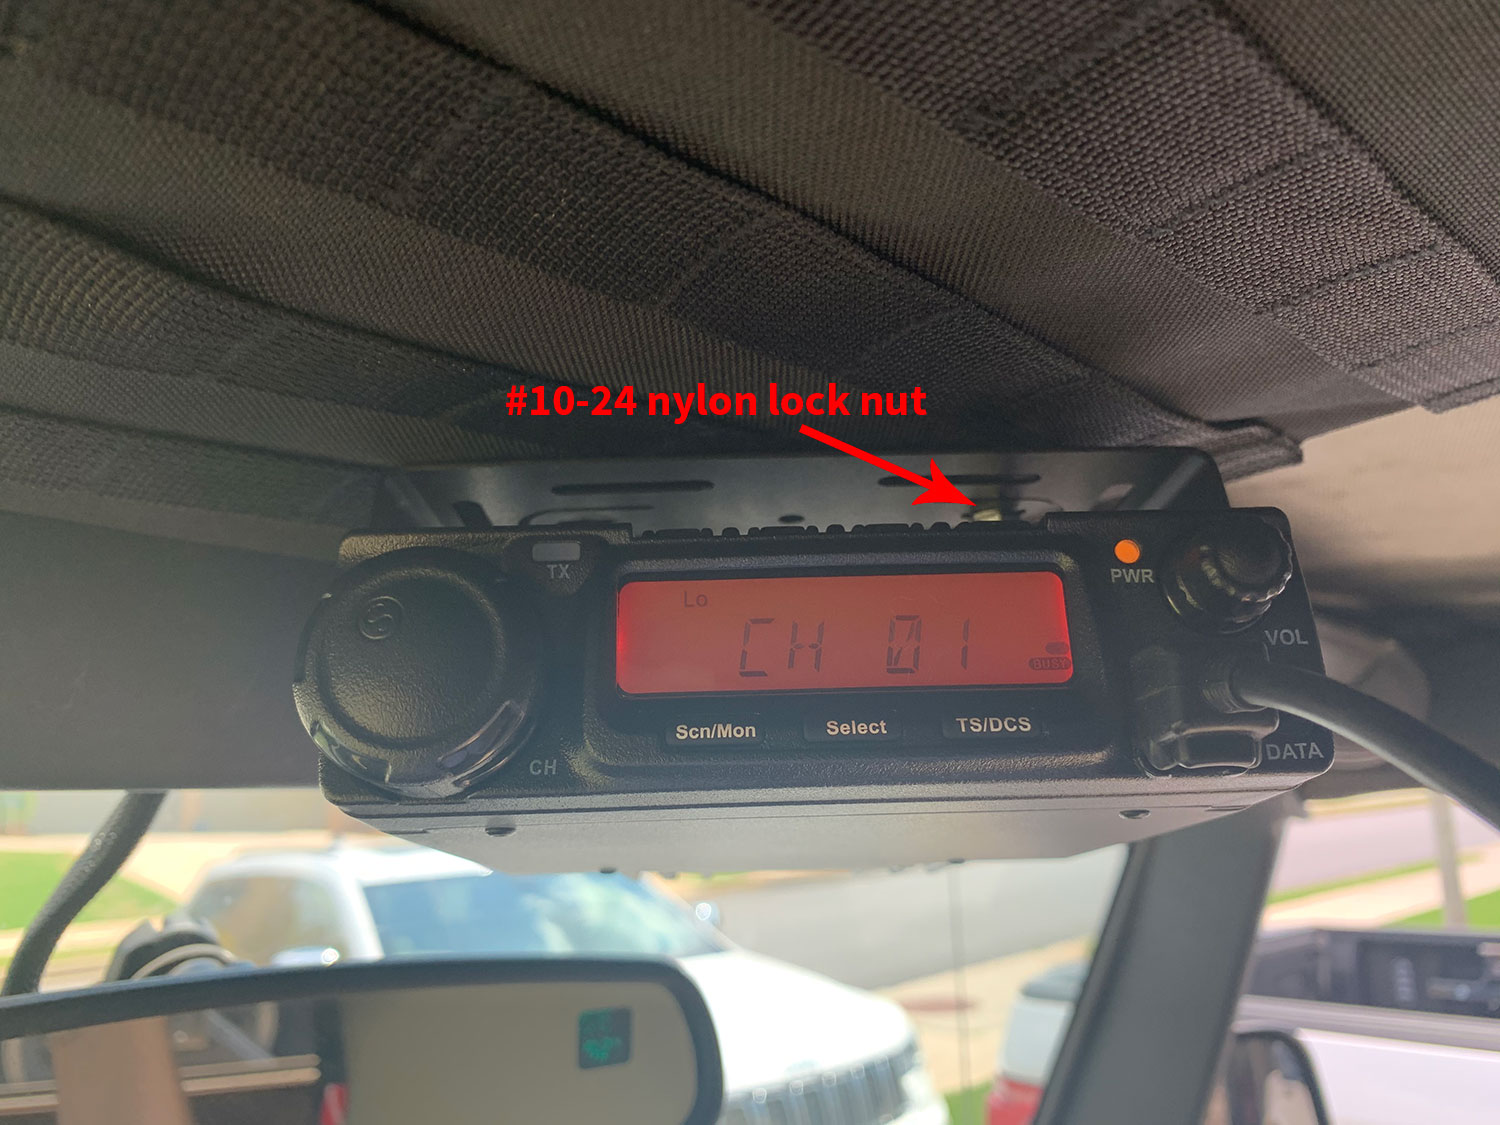 midland-mxt400-gmrs-radio-icom-ic-2730a-ham-radio-install-jeep-wrangler-part-2-7.jpg